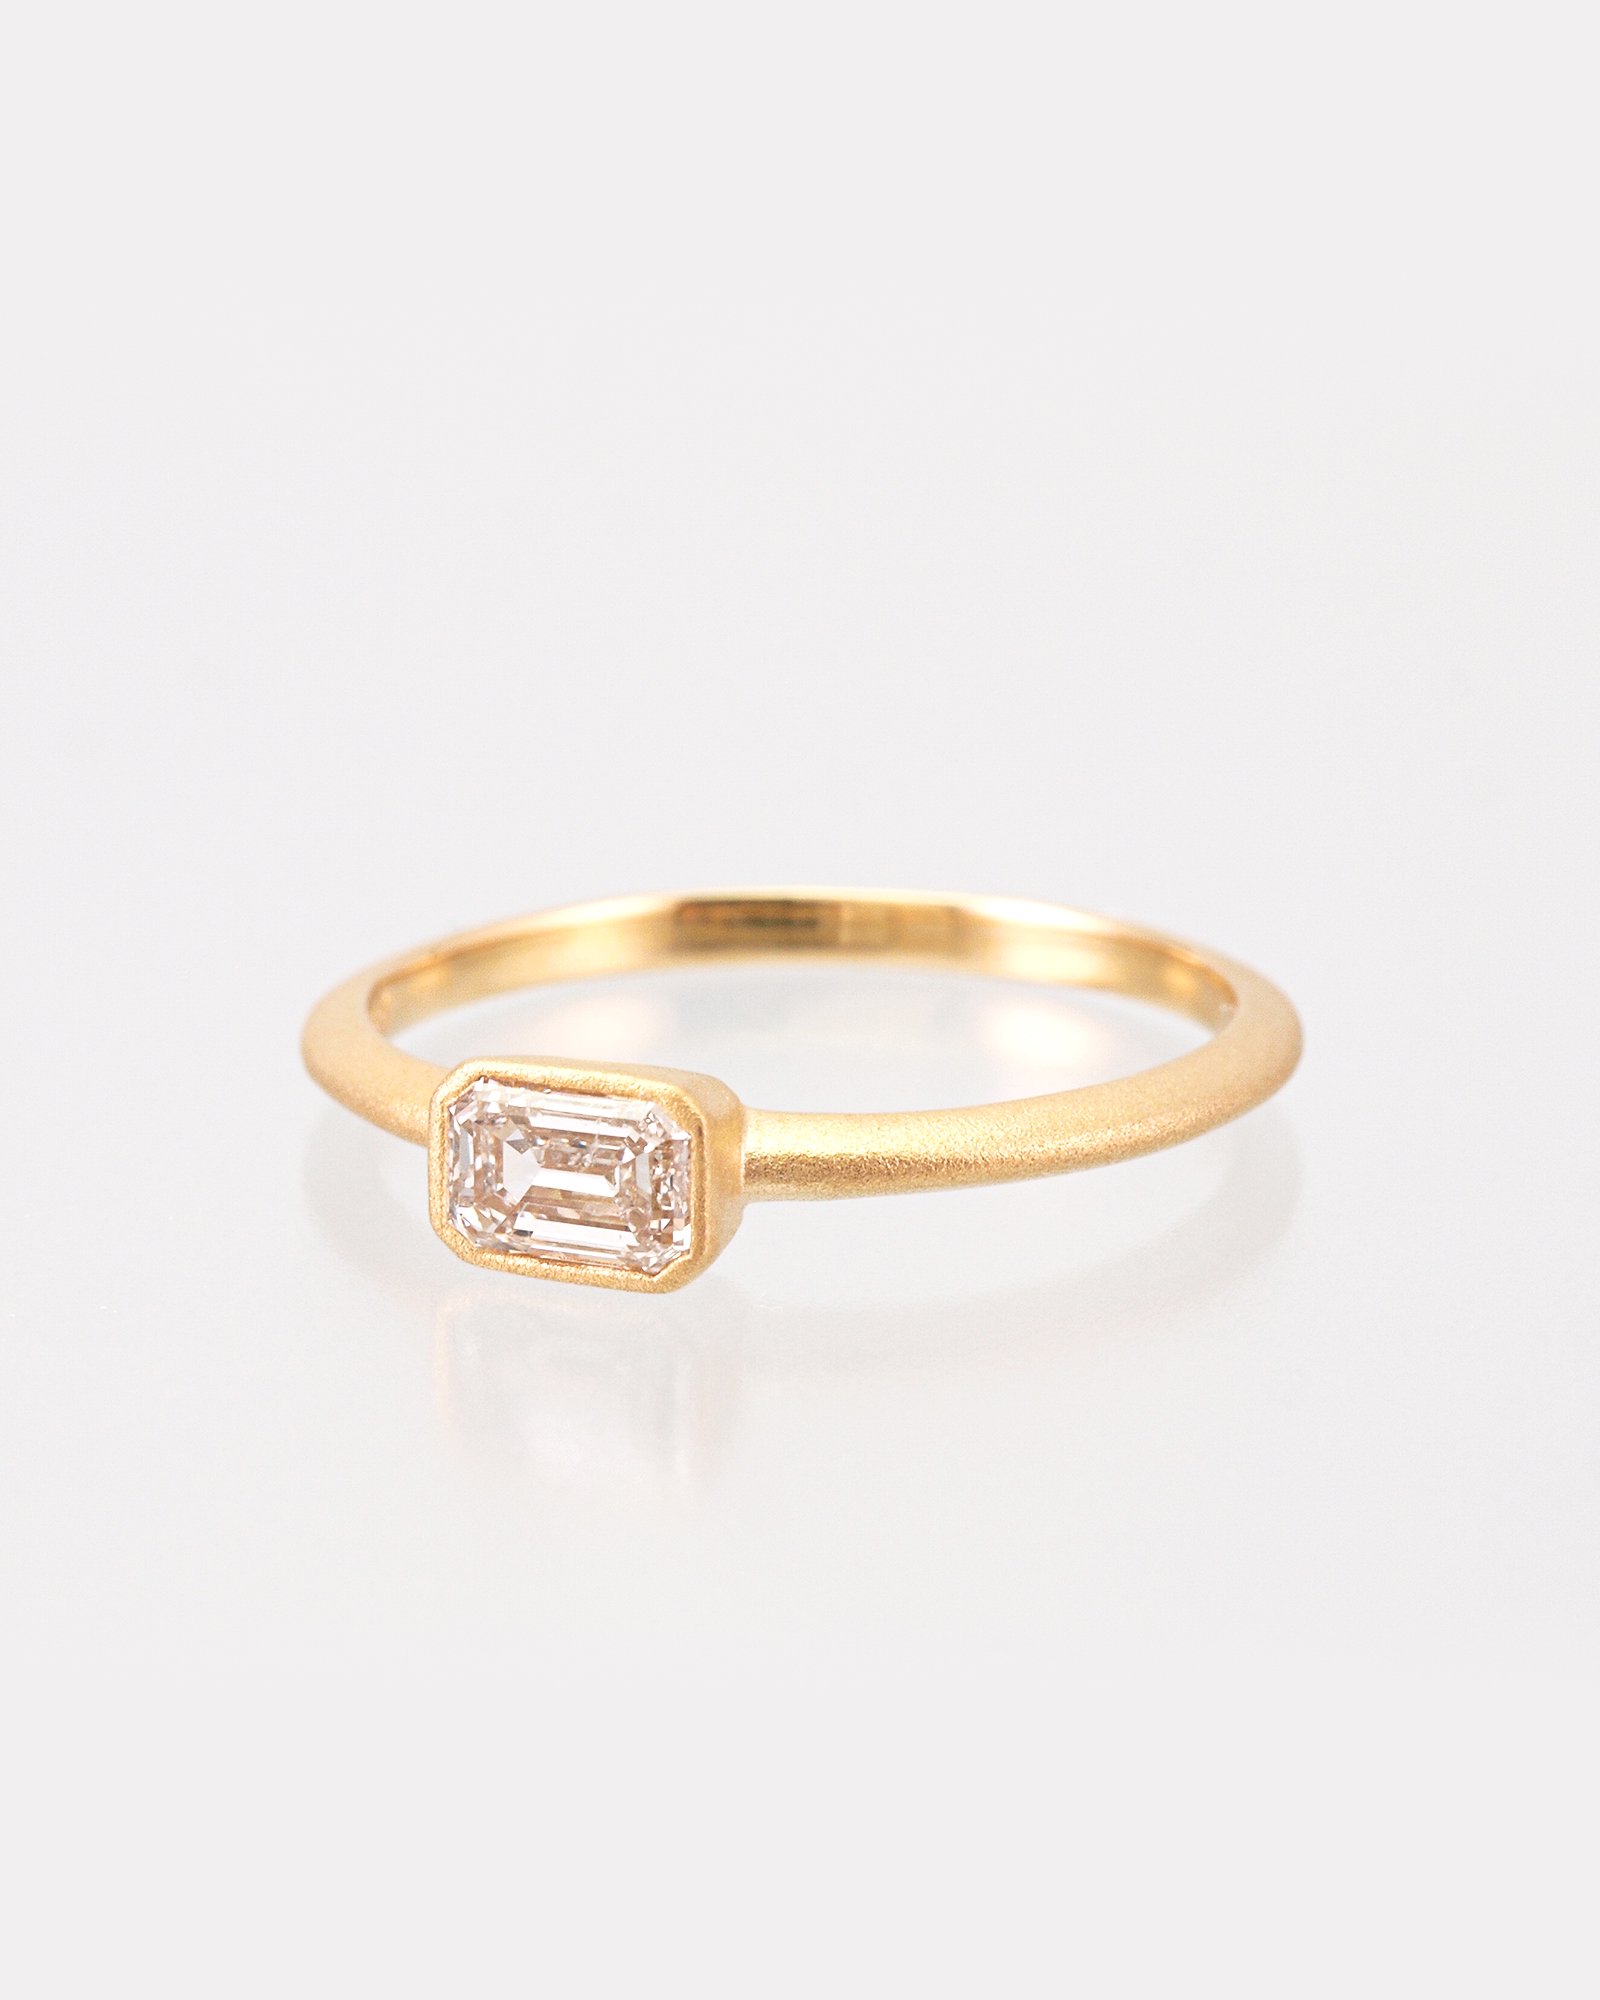 K18 Emerald Cut Diamond Ring